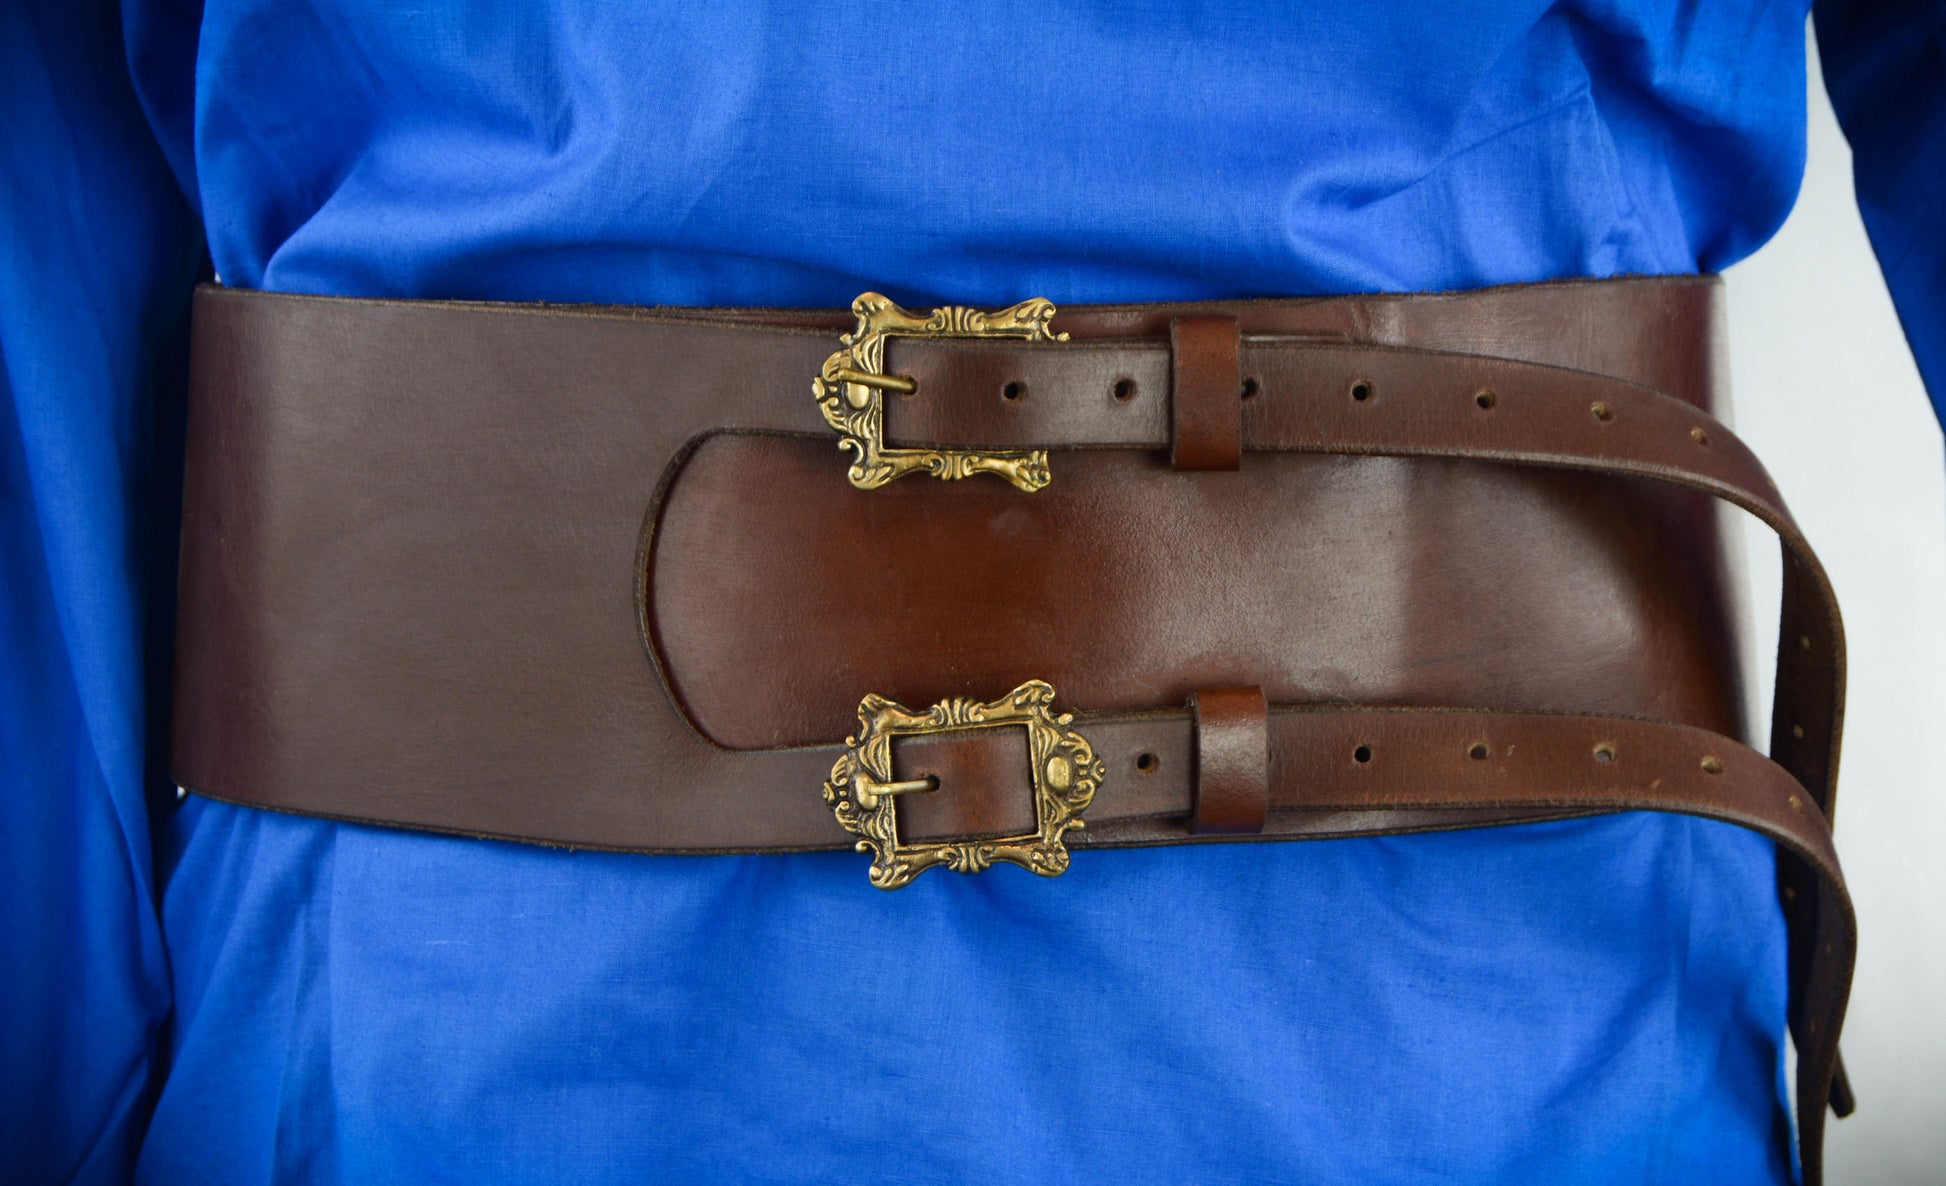 Dual-Buckle Pirate Waist Belt - Brown